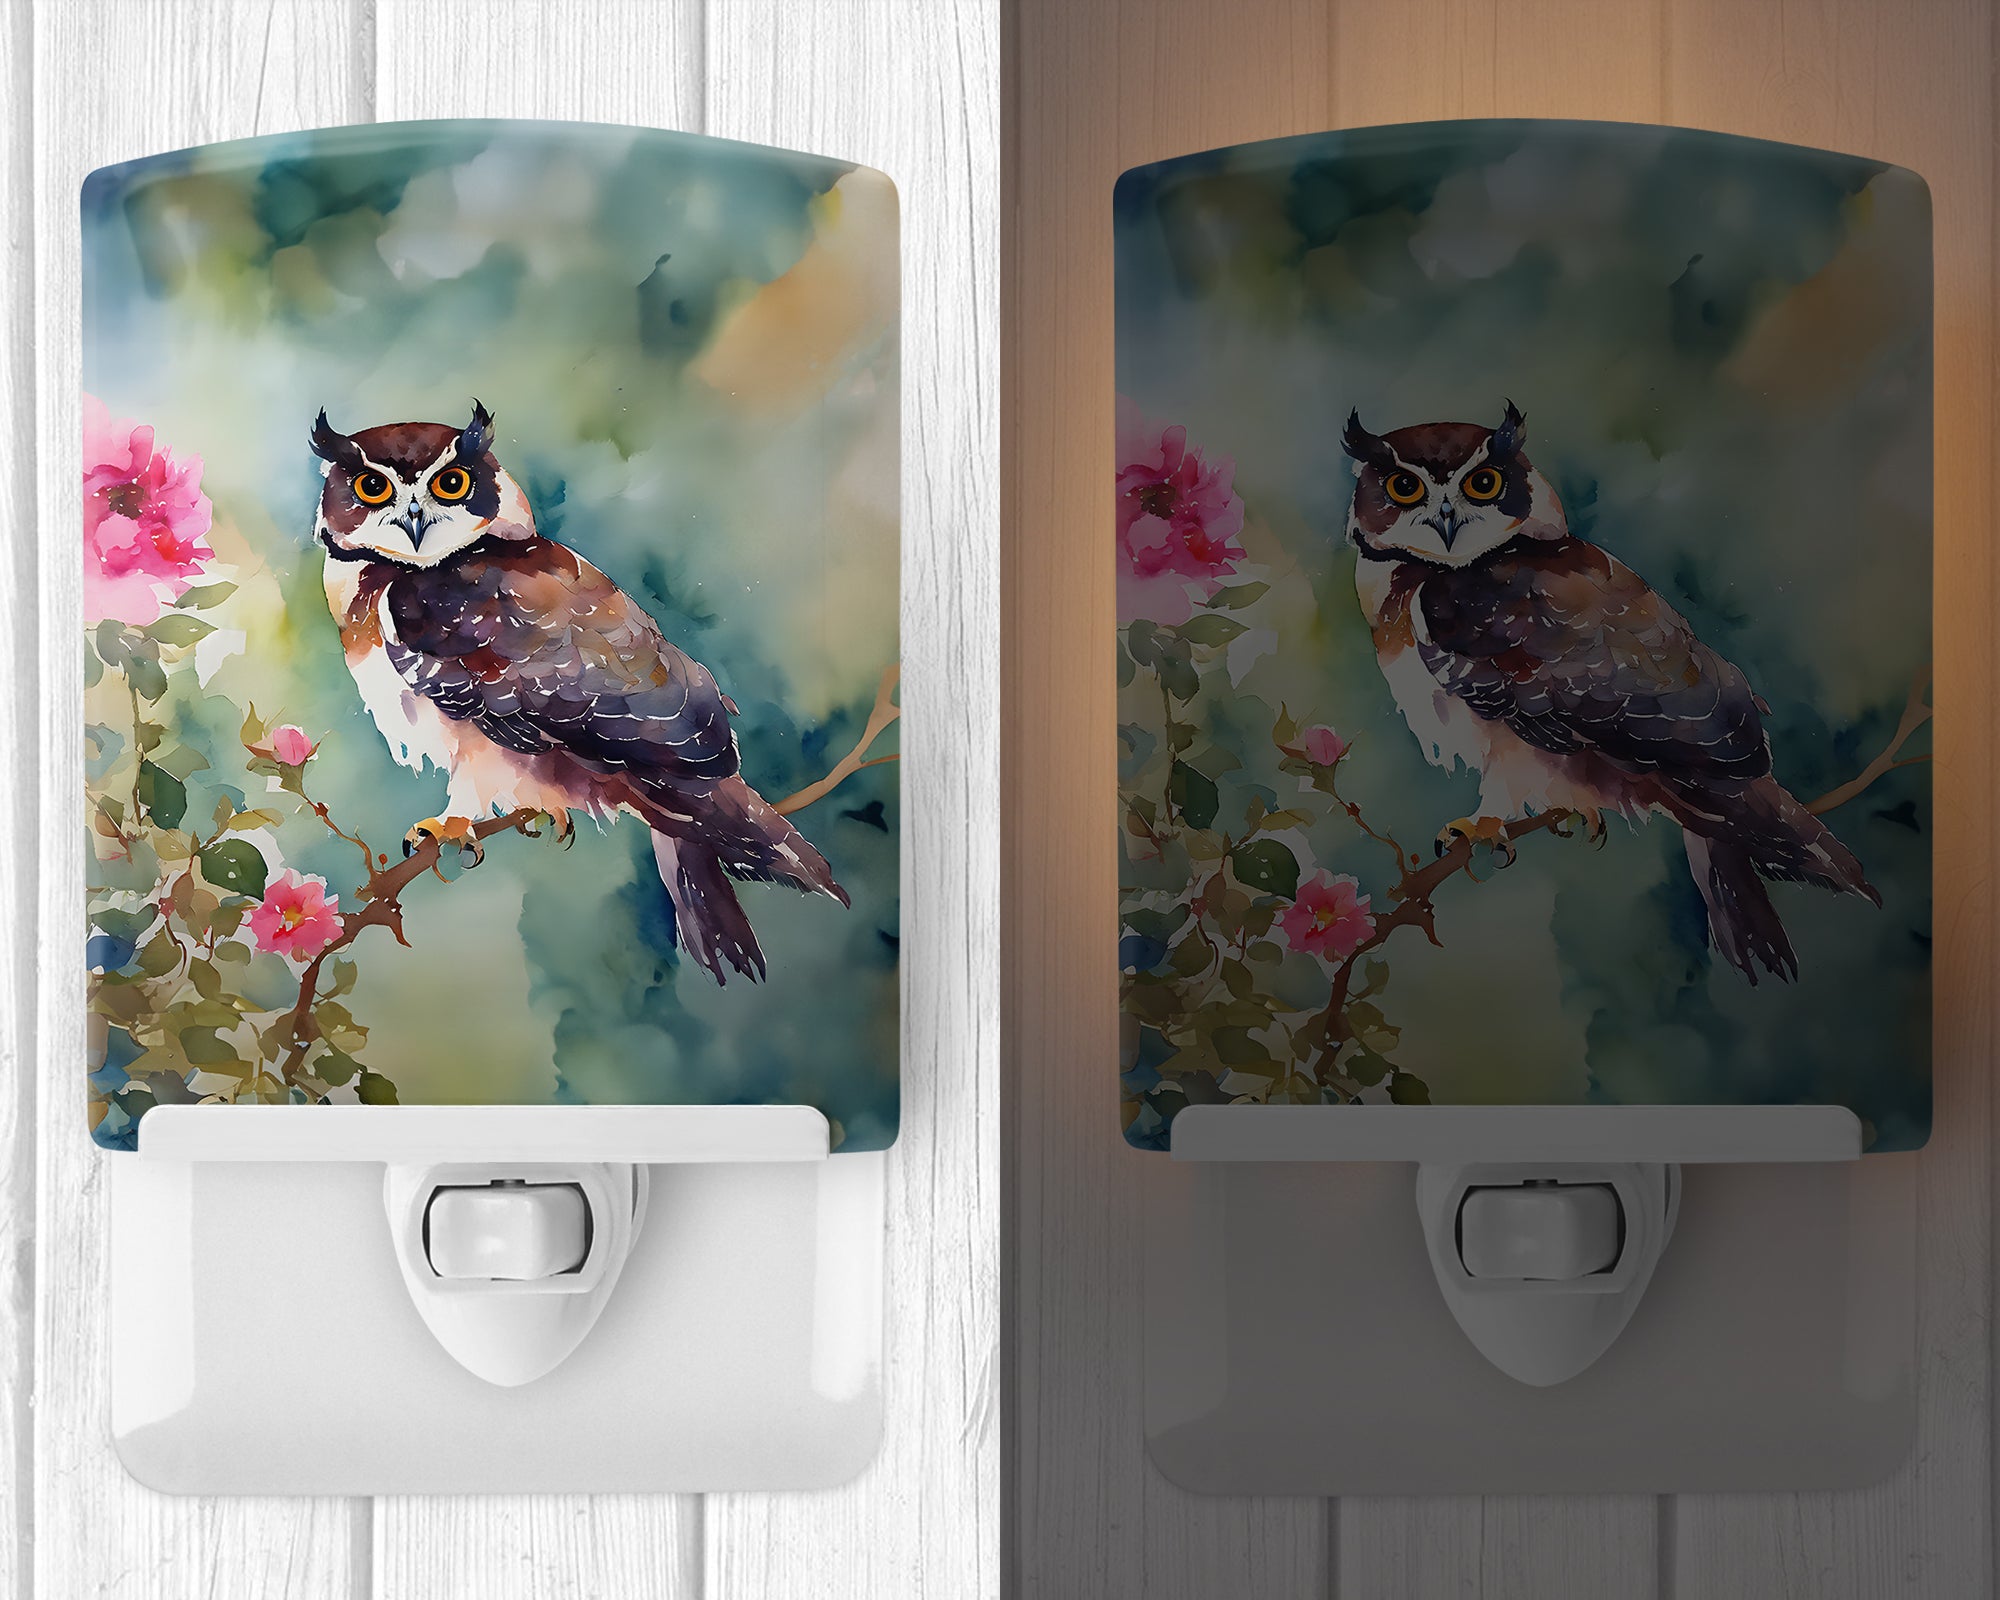 Buy this Spectacled Owl Ceramic Night Light